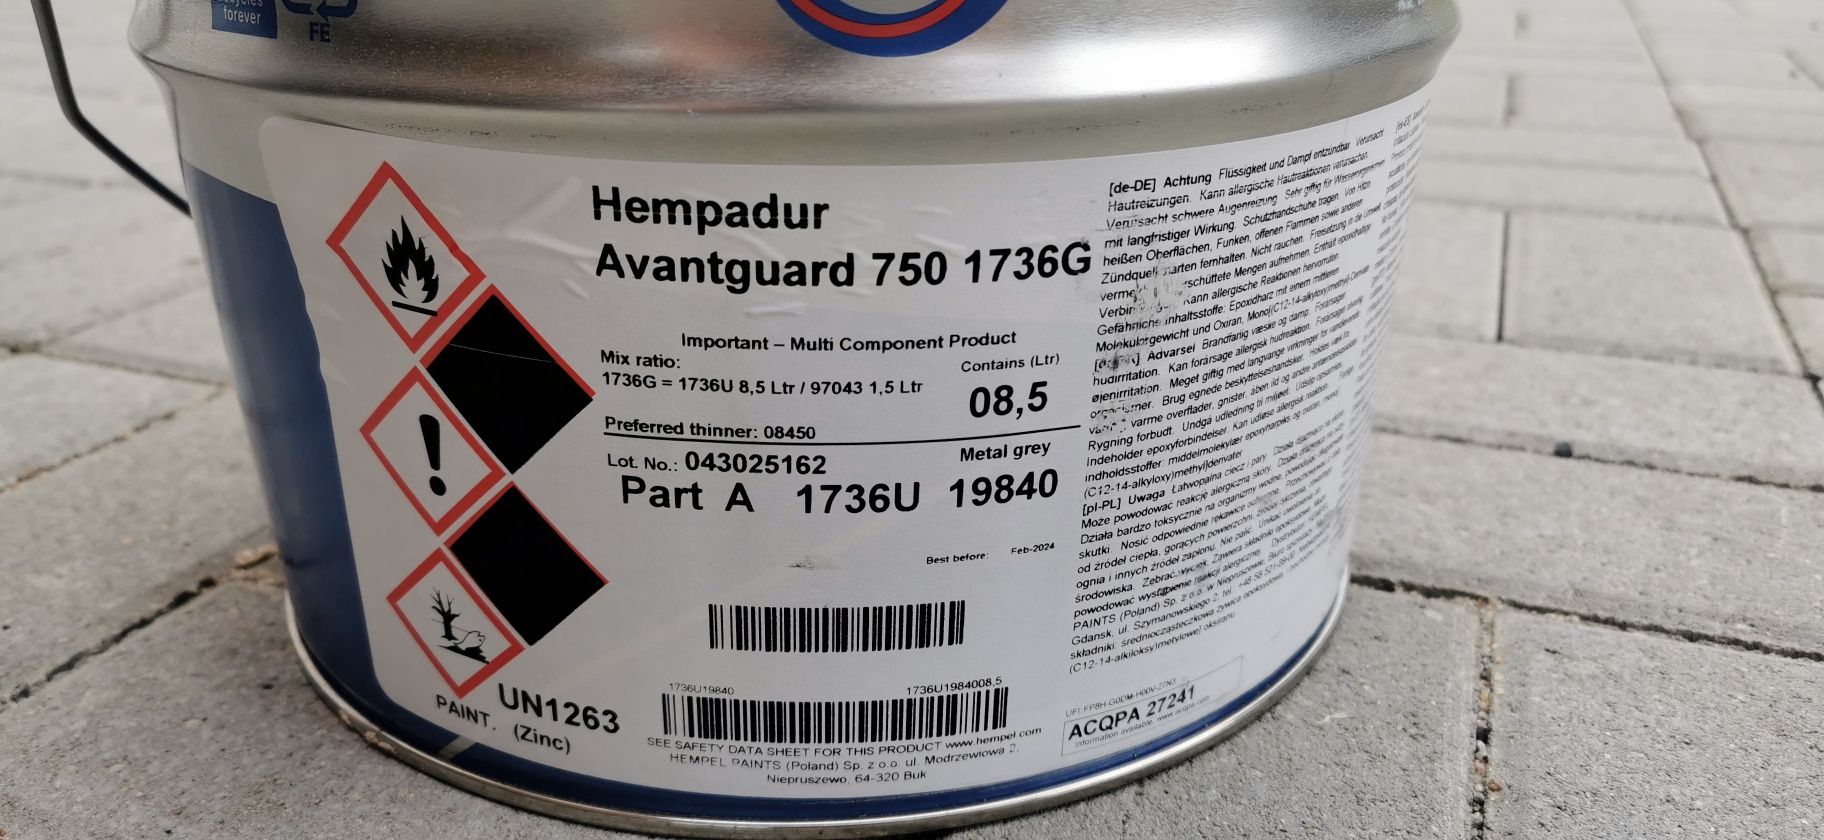 Żywica epoksydowa Hempel Hempadur Avantguard 750